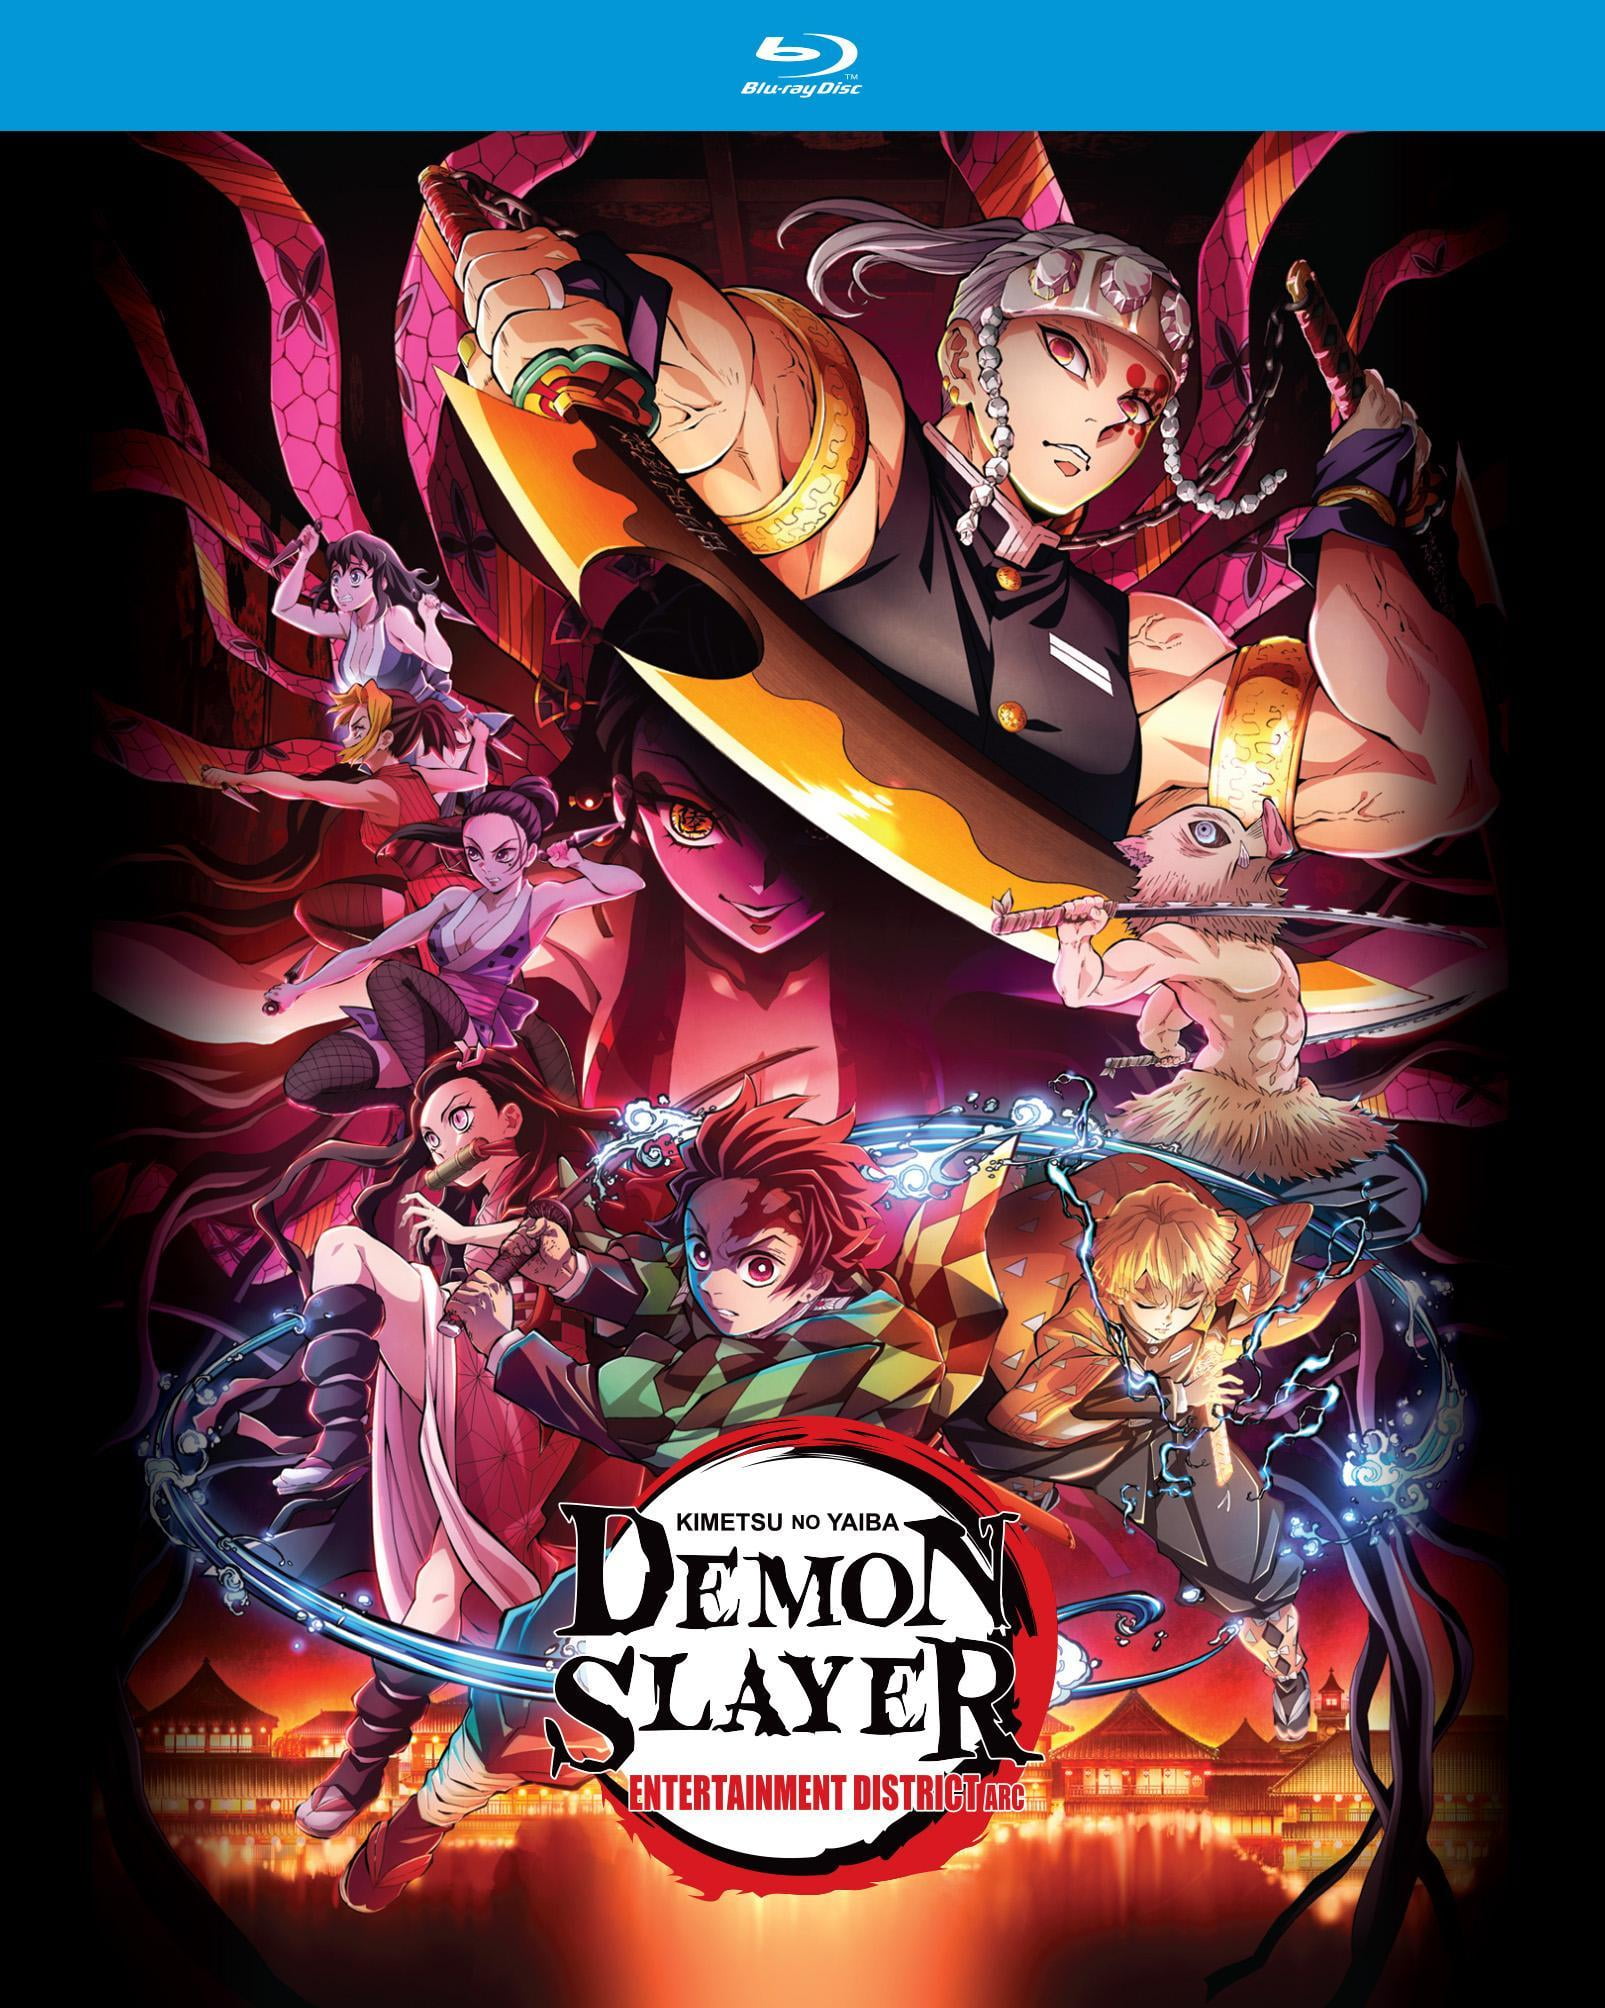 Demon Slayer: Kimetsu no Yaiba (English) on X: Demon Slayer: Kimetsu no  Yaiba Entertainment District Arc English dub Episode 6 Layered Memories  is streaming now on @Crunchyroll and @Funimation! 🔥   /